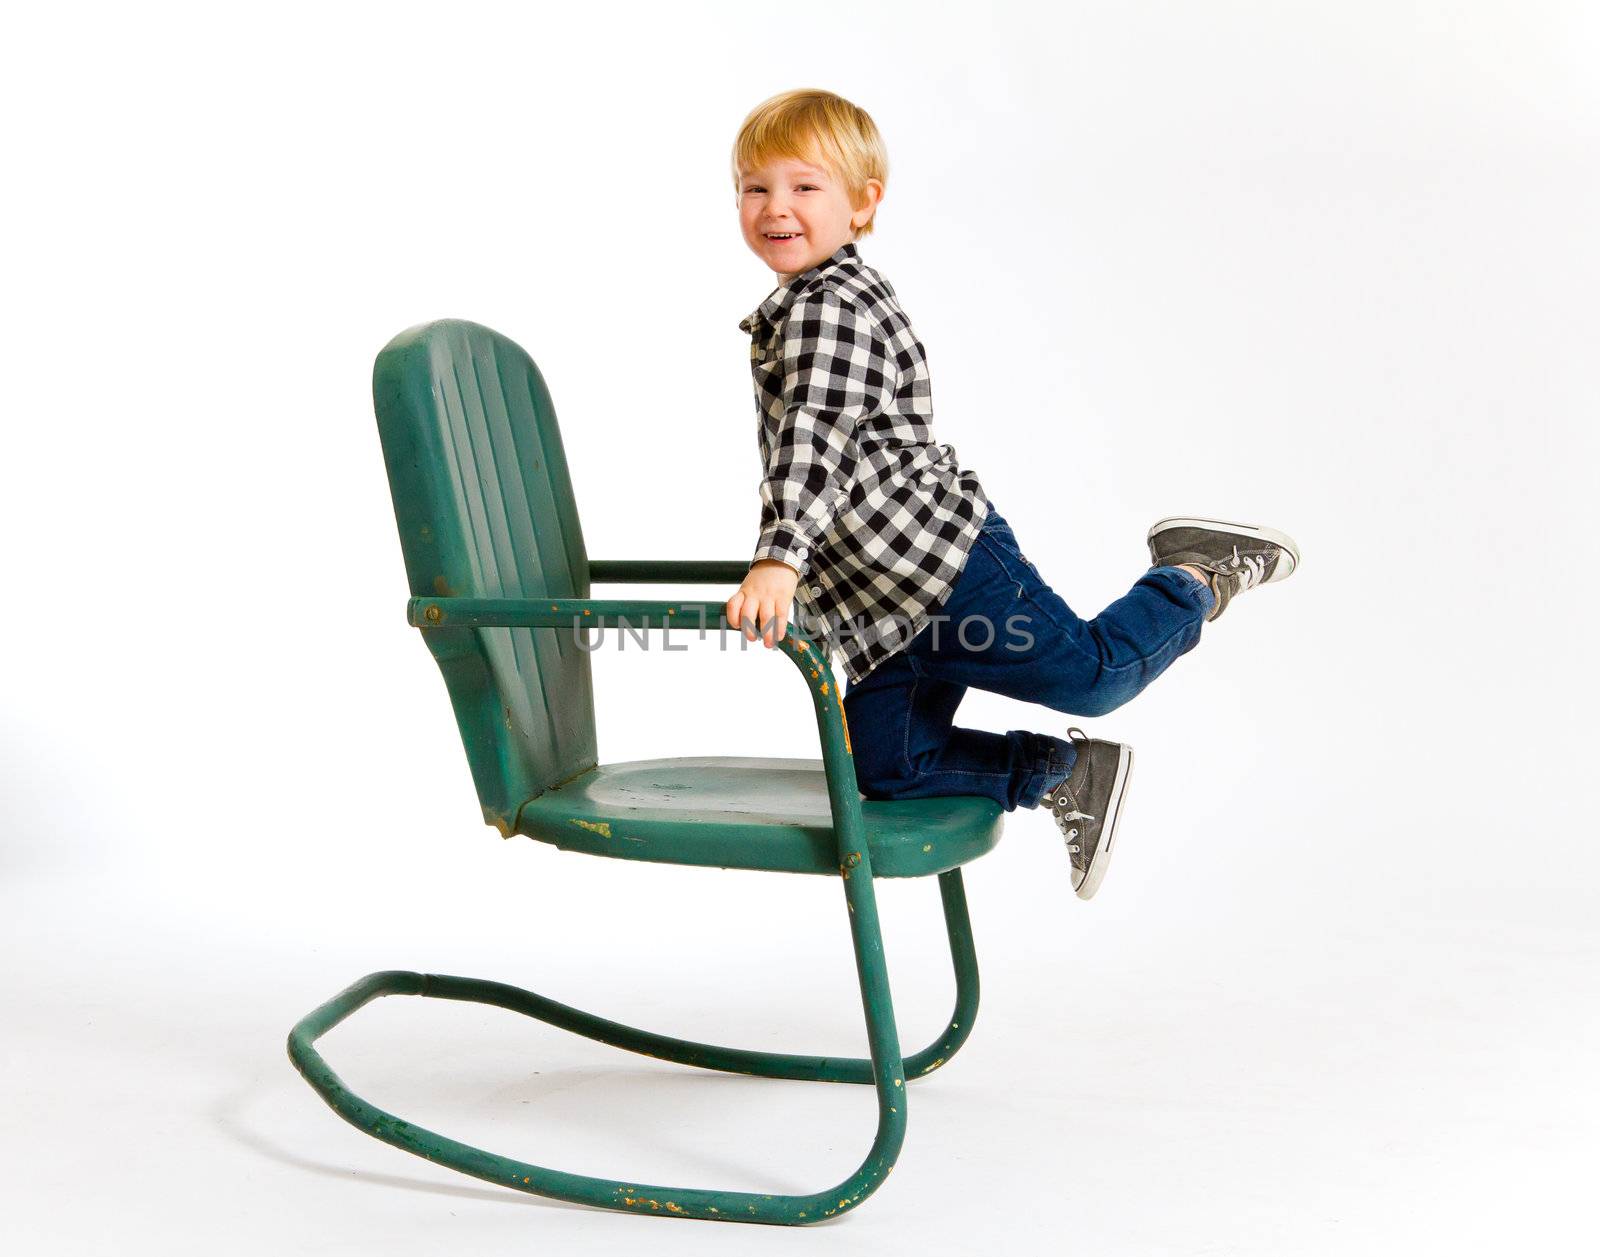 Boy Having Fun On Chair by joshuaraineyphotography